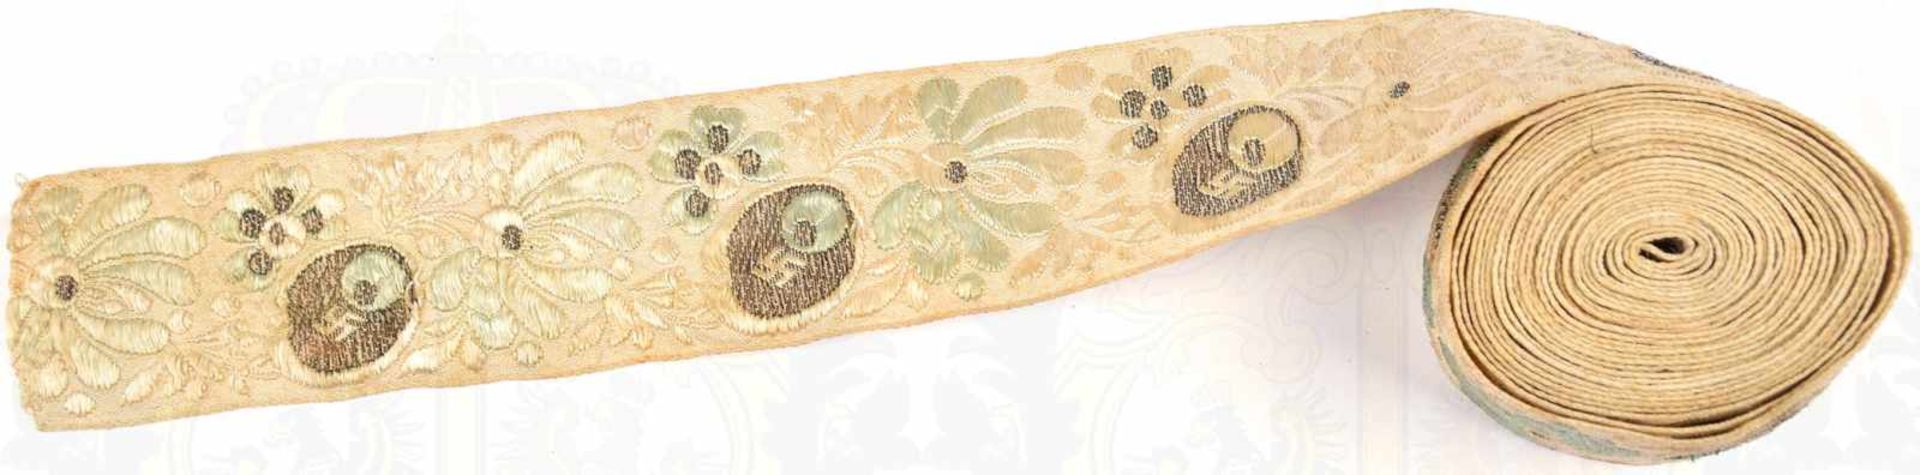 ROLLE BORTE, farb. gewebt u. gestickt m. HK u. floralen Motiven, L. 295cm, Br. 37mm, um 1933